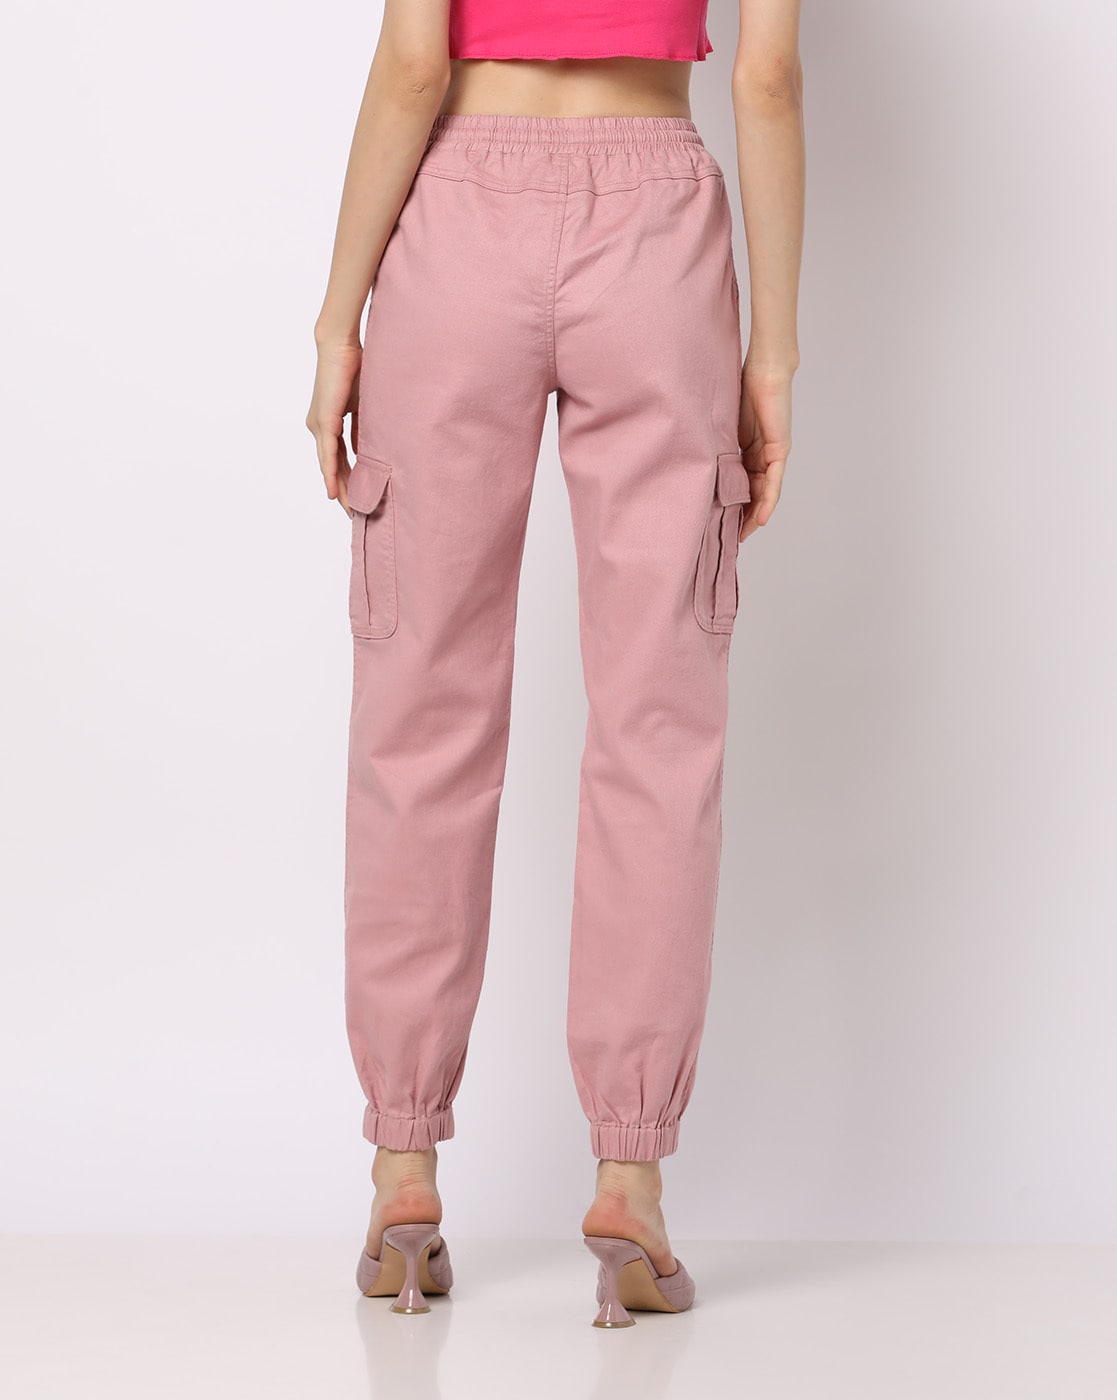 Cotton Light Pink Ladies Plain Cargo Pant at Rs 250/piece in Mumbai